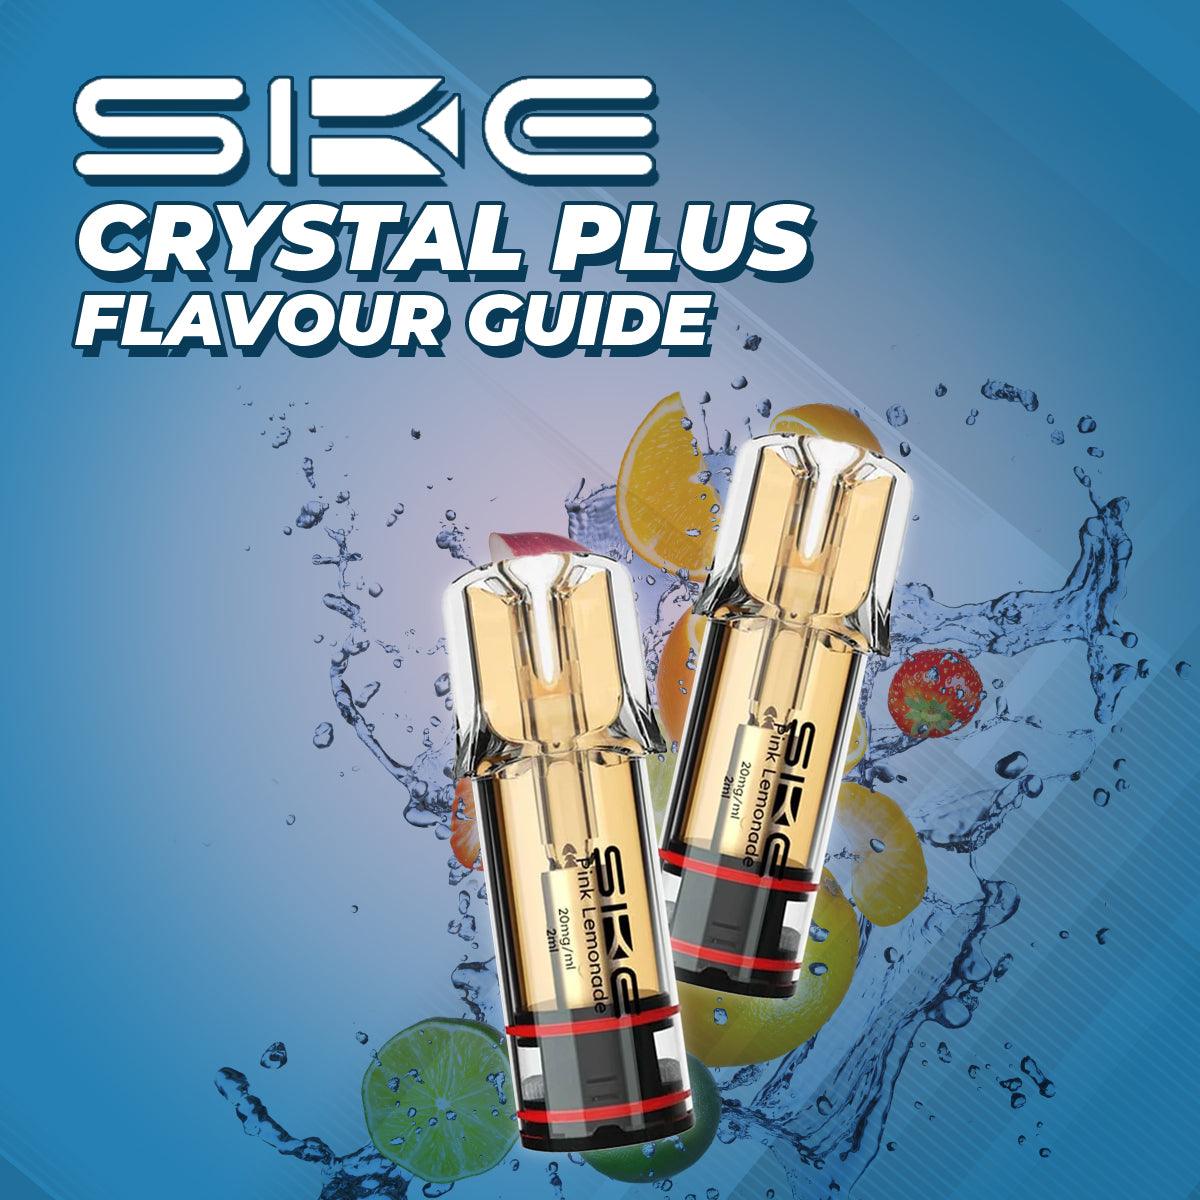 SKE Crystal Plus Flavours: A Complete List